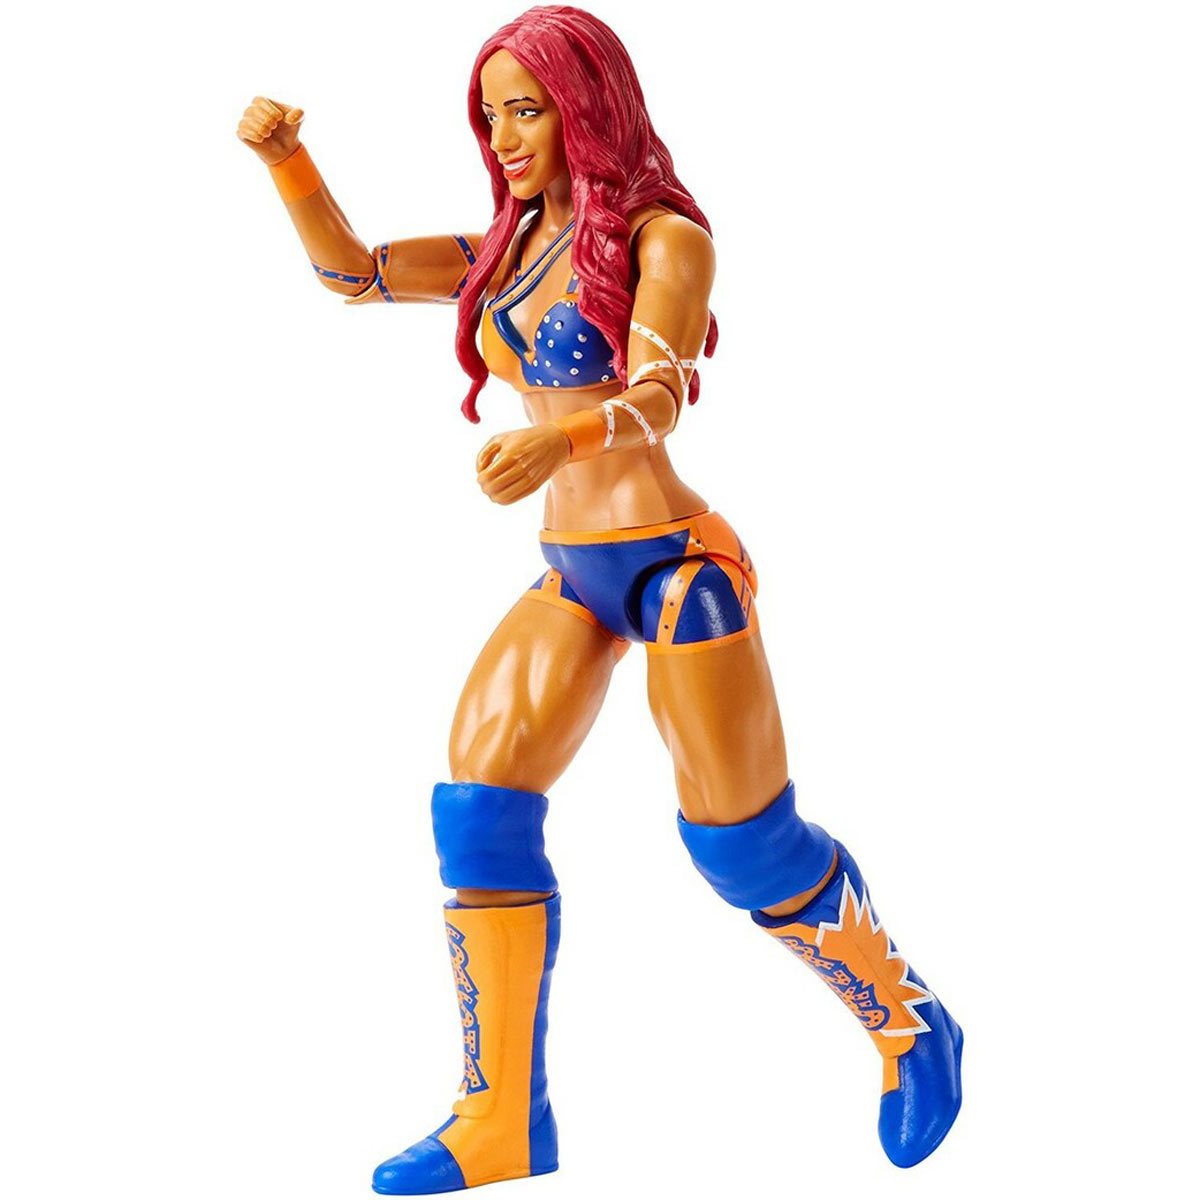 Sasha Banks WWE Mattel Basic Series 80 Brand New Action Figure Mint Packaging 